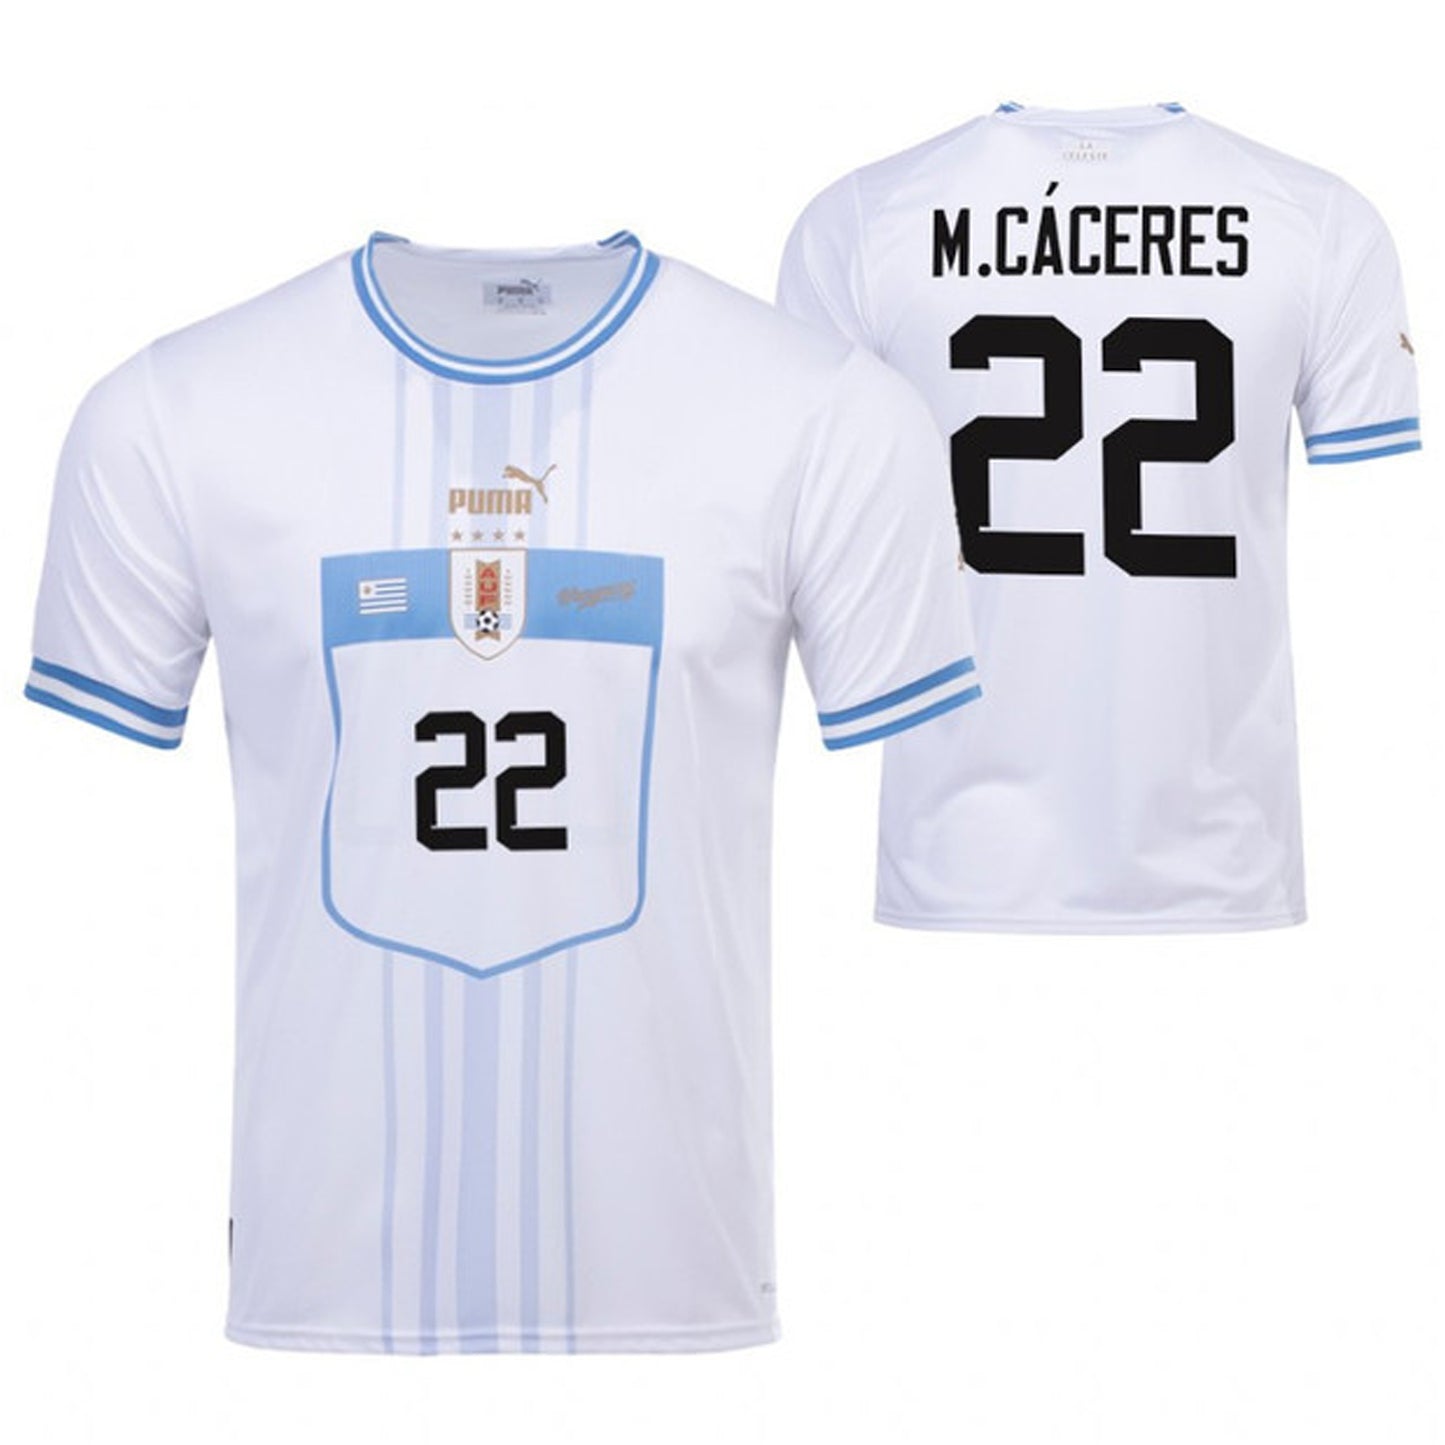 Martin Caceres Uruguay 22 Fifa World Cup Jersey